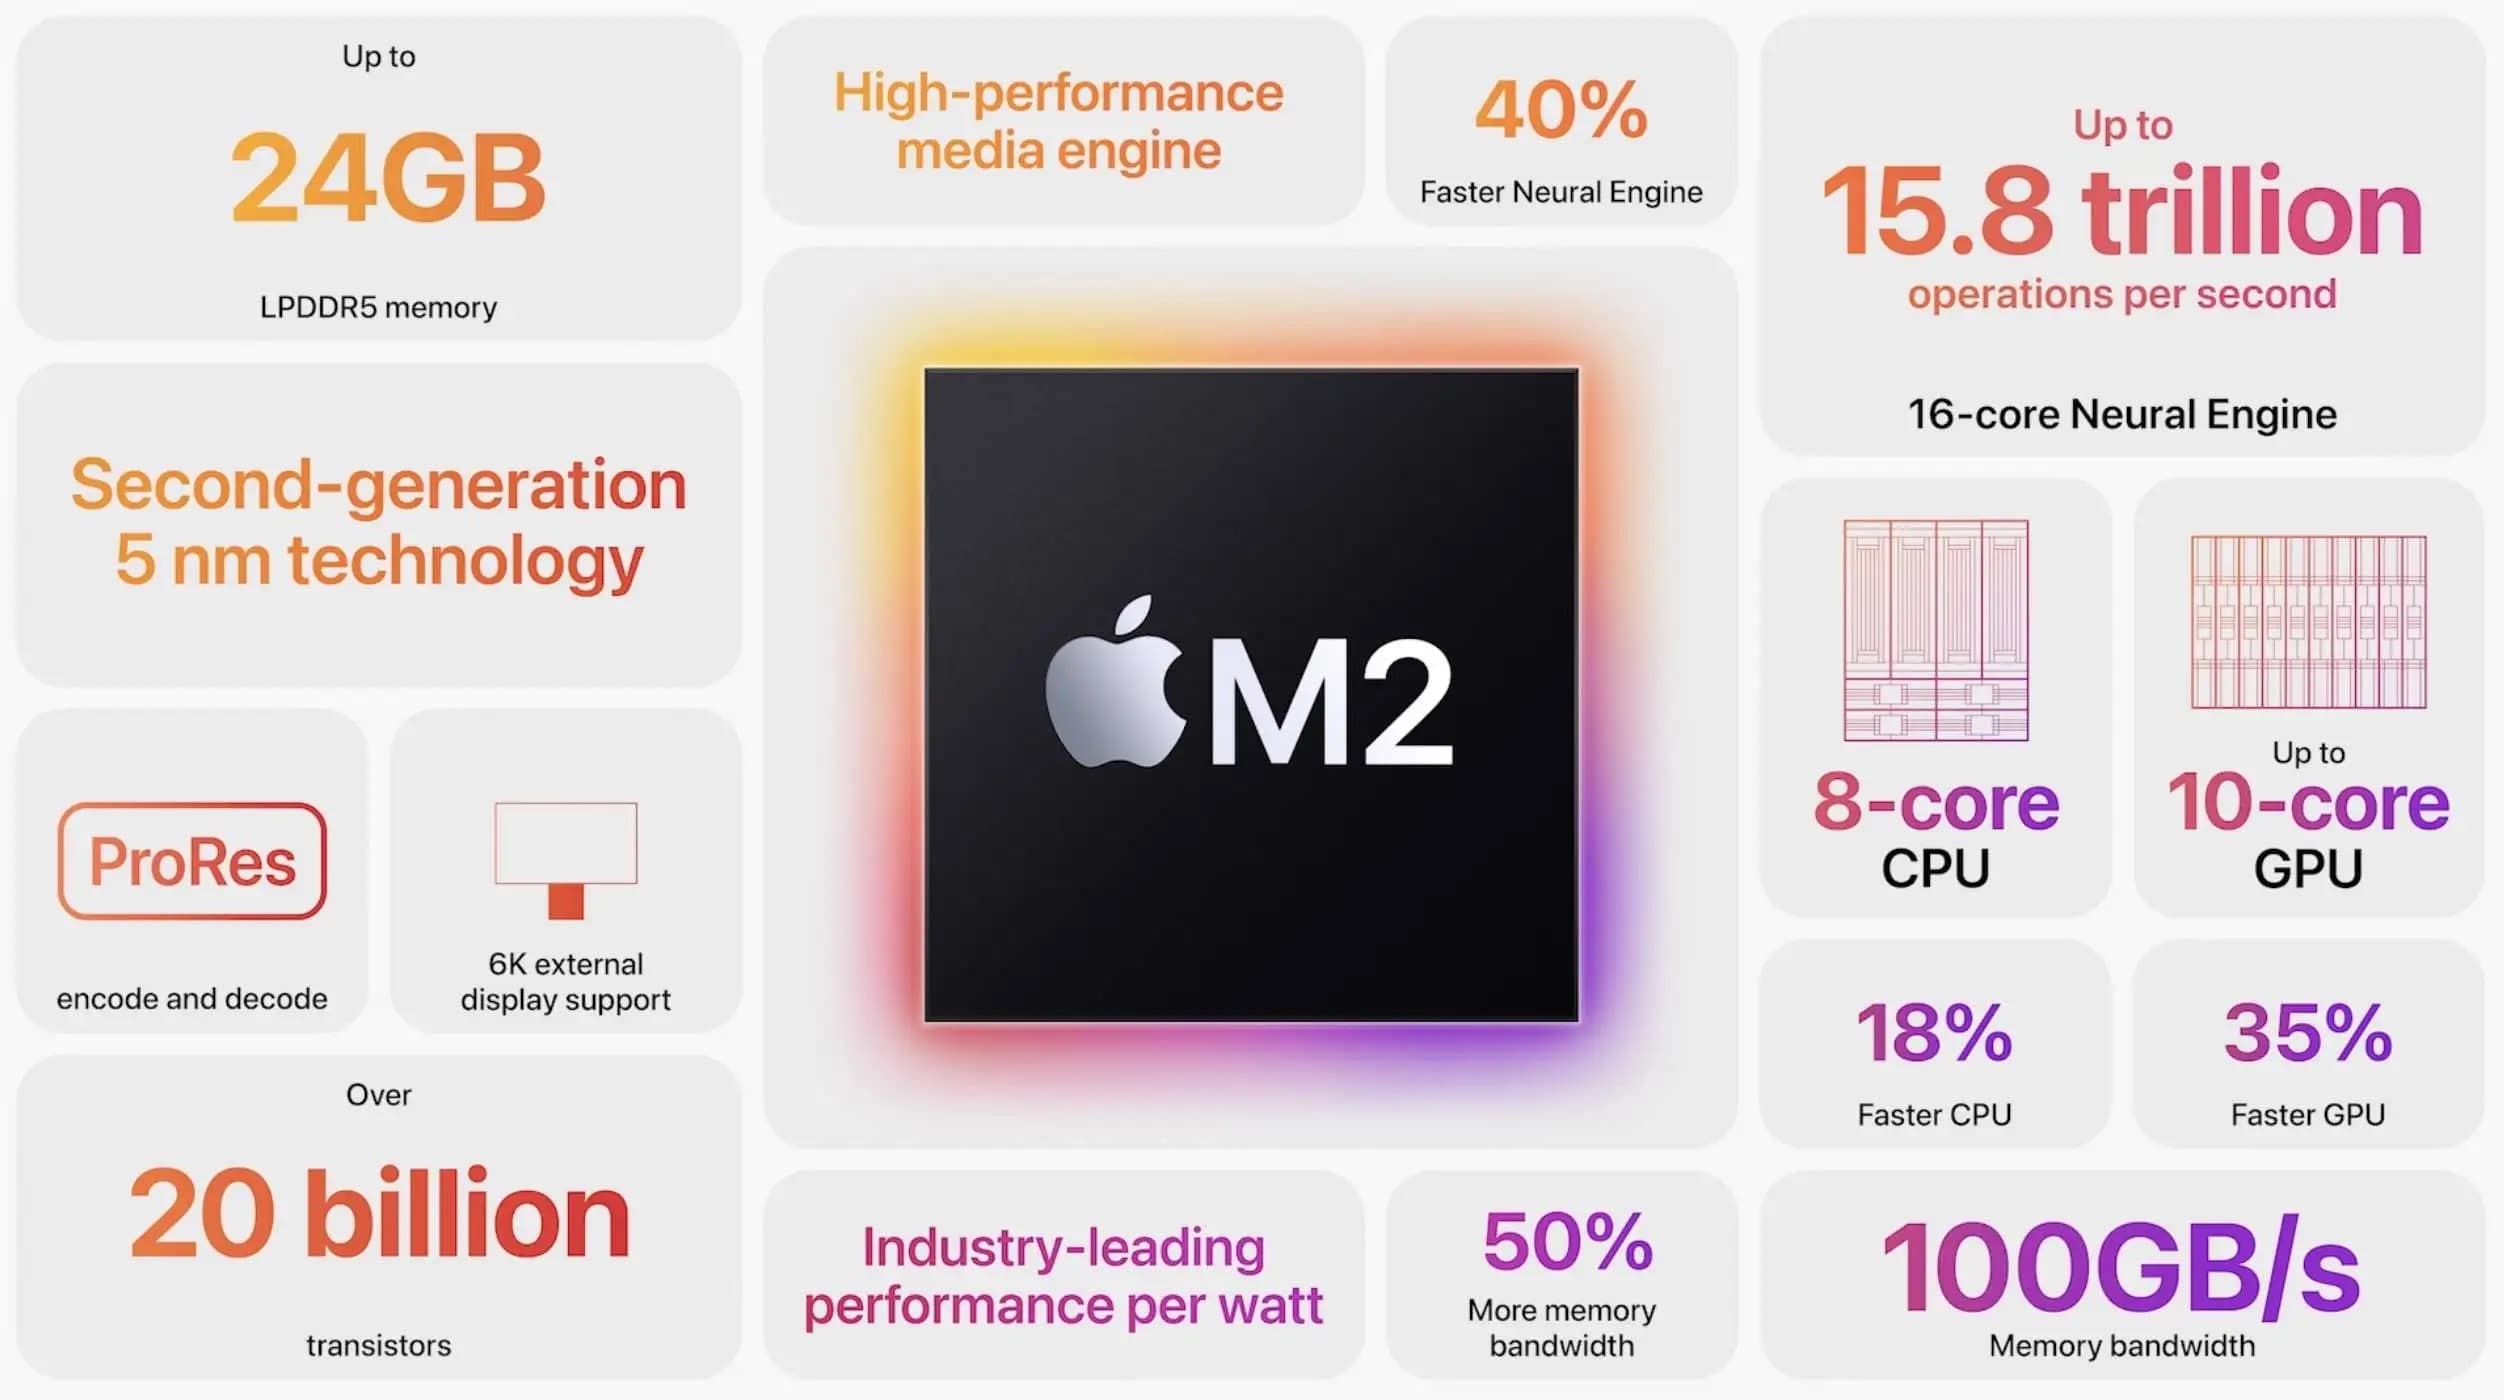 macbook air m1 vs macbook pro m1